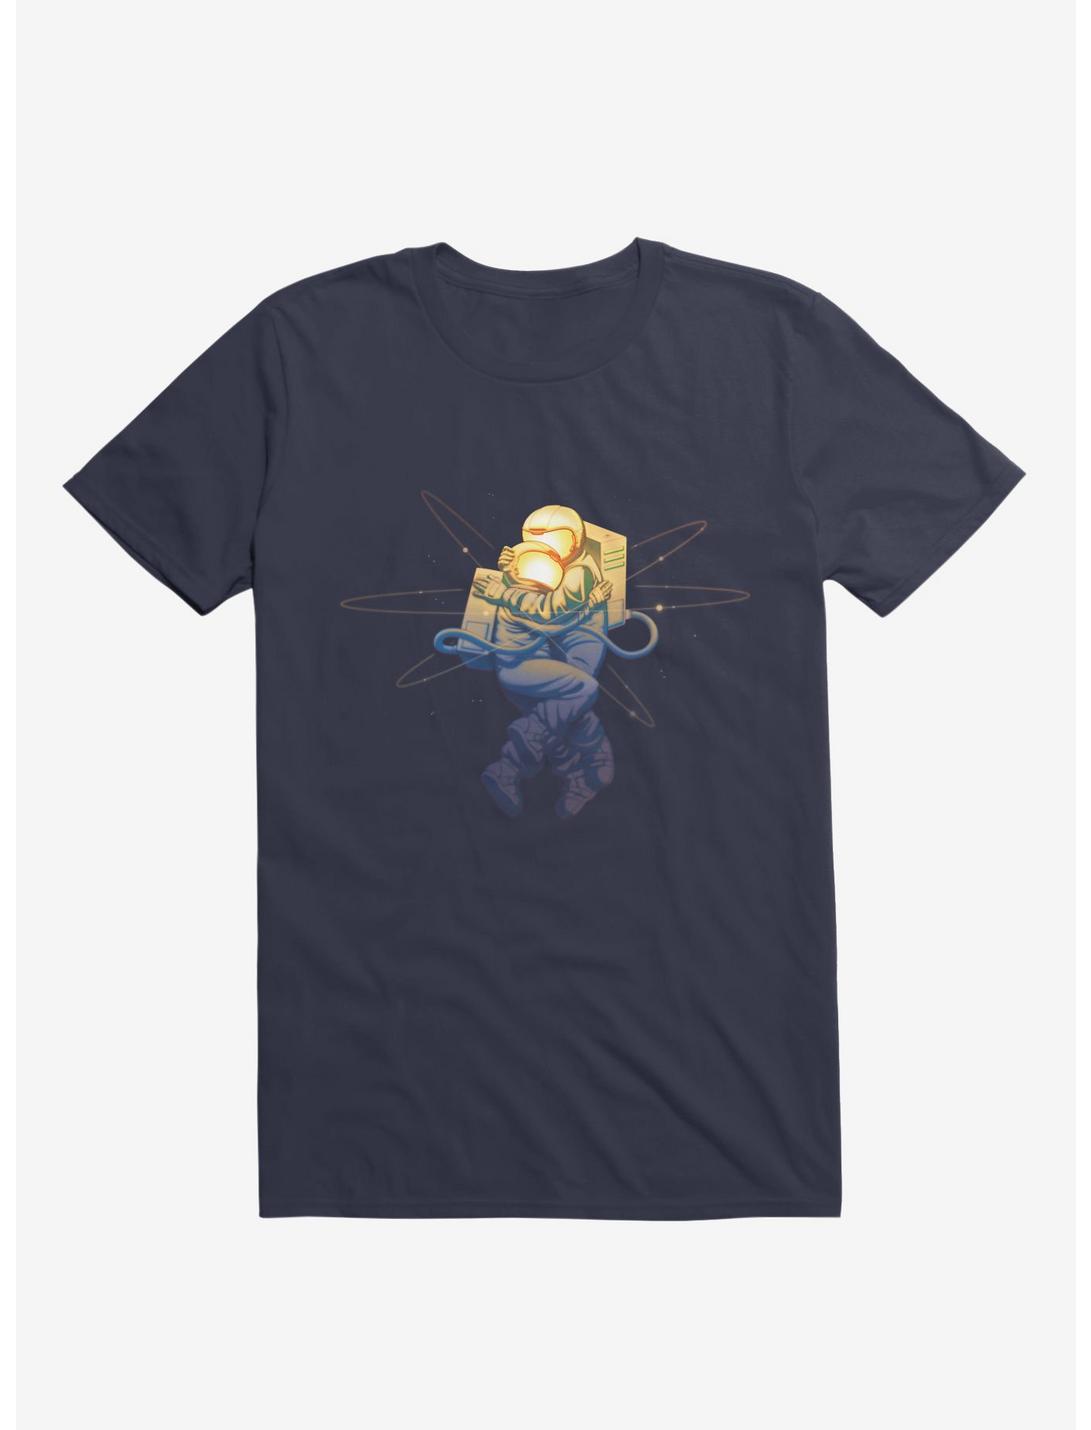 Astro Love Navy Blue T-Shirt, NAVY, hi-res